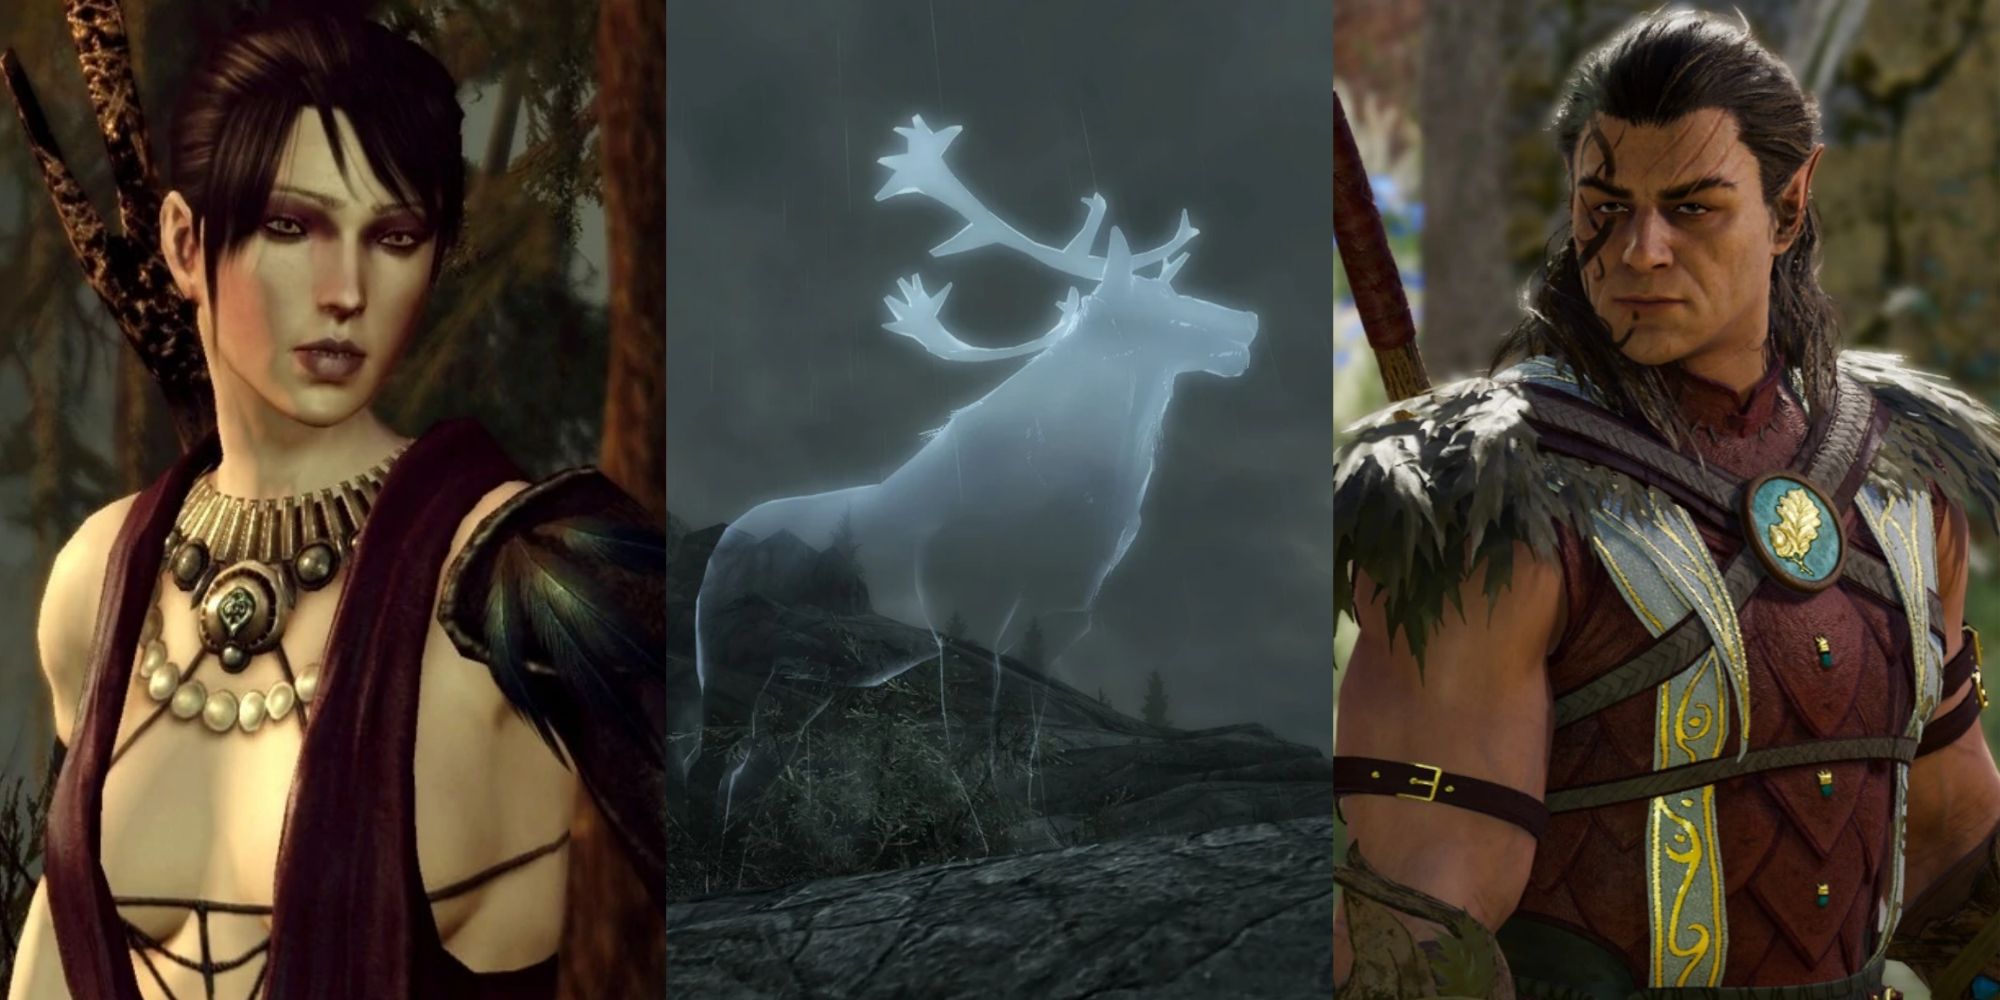 Collage of Druid Representations - Morrigan from Dragon Age, Hircine Aspect from Skyrim, Halsin from Baldur's Gate 3